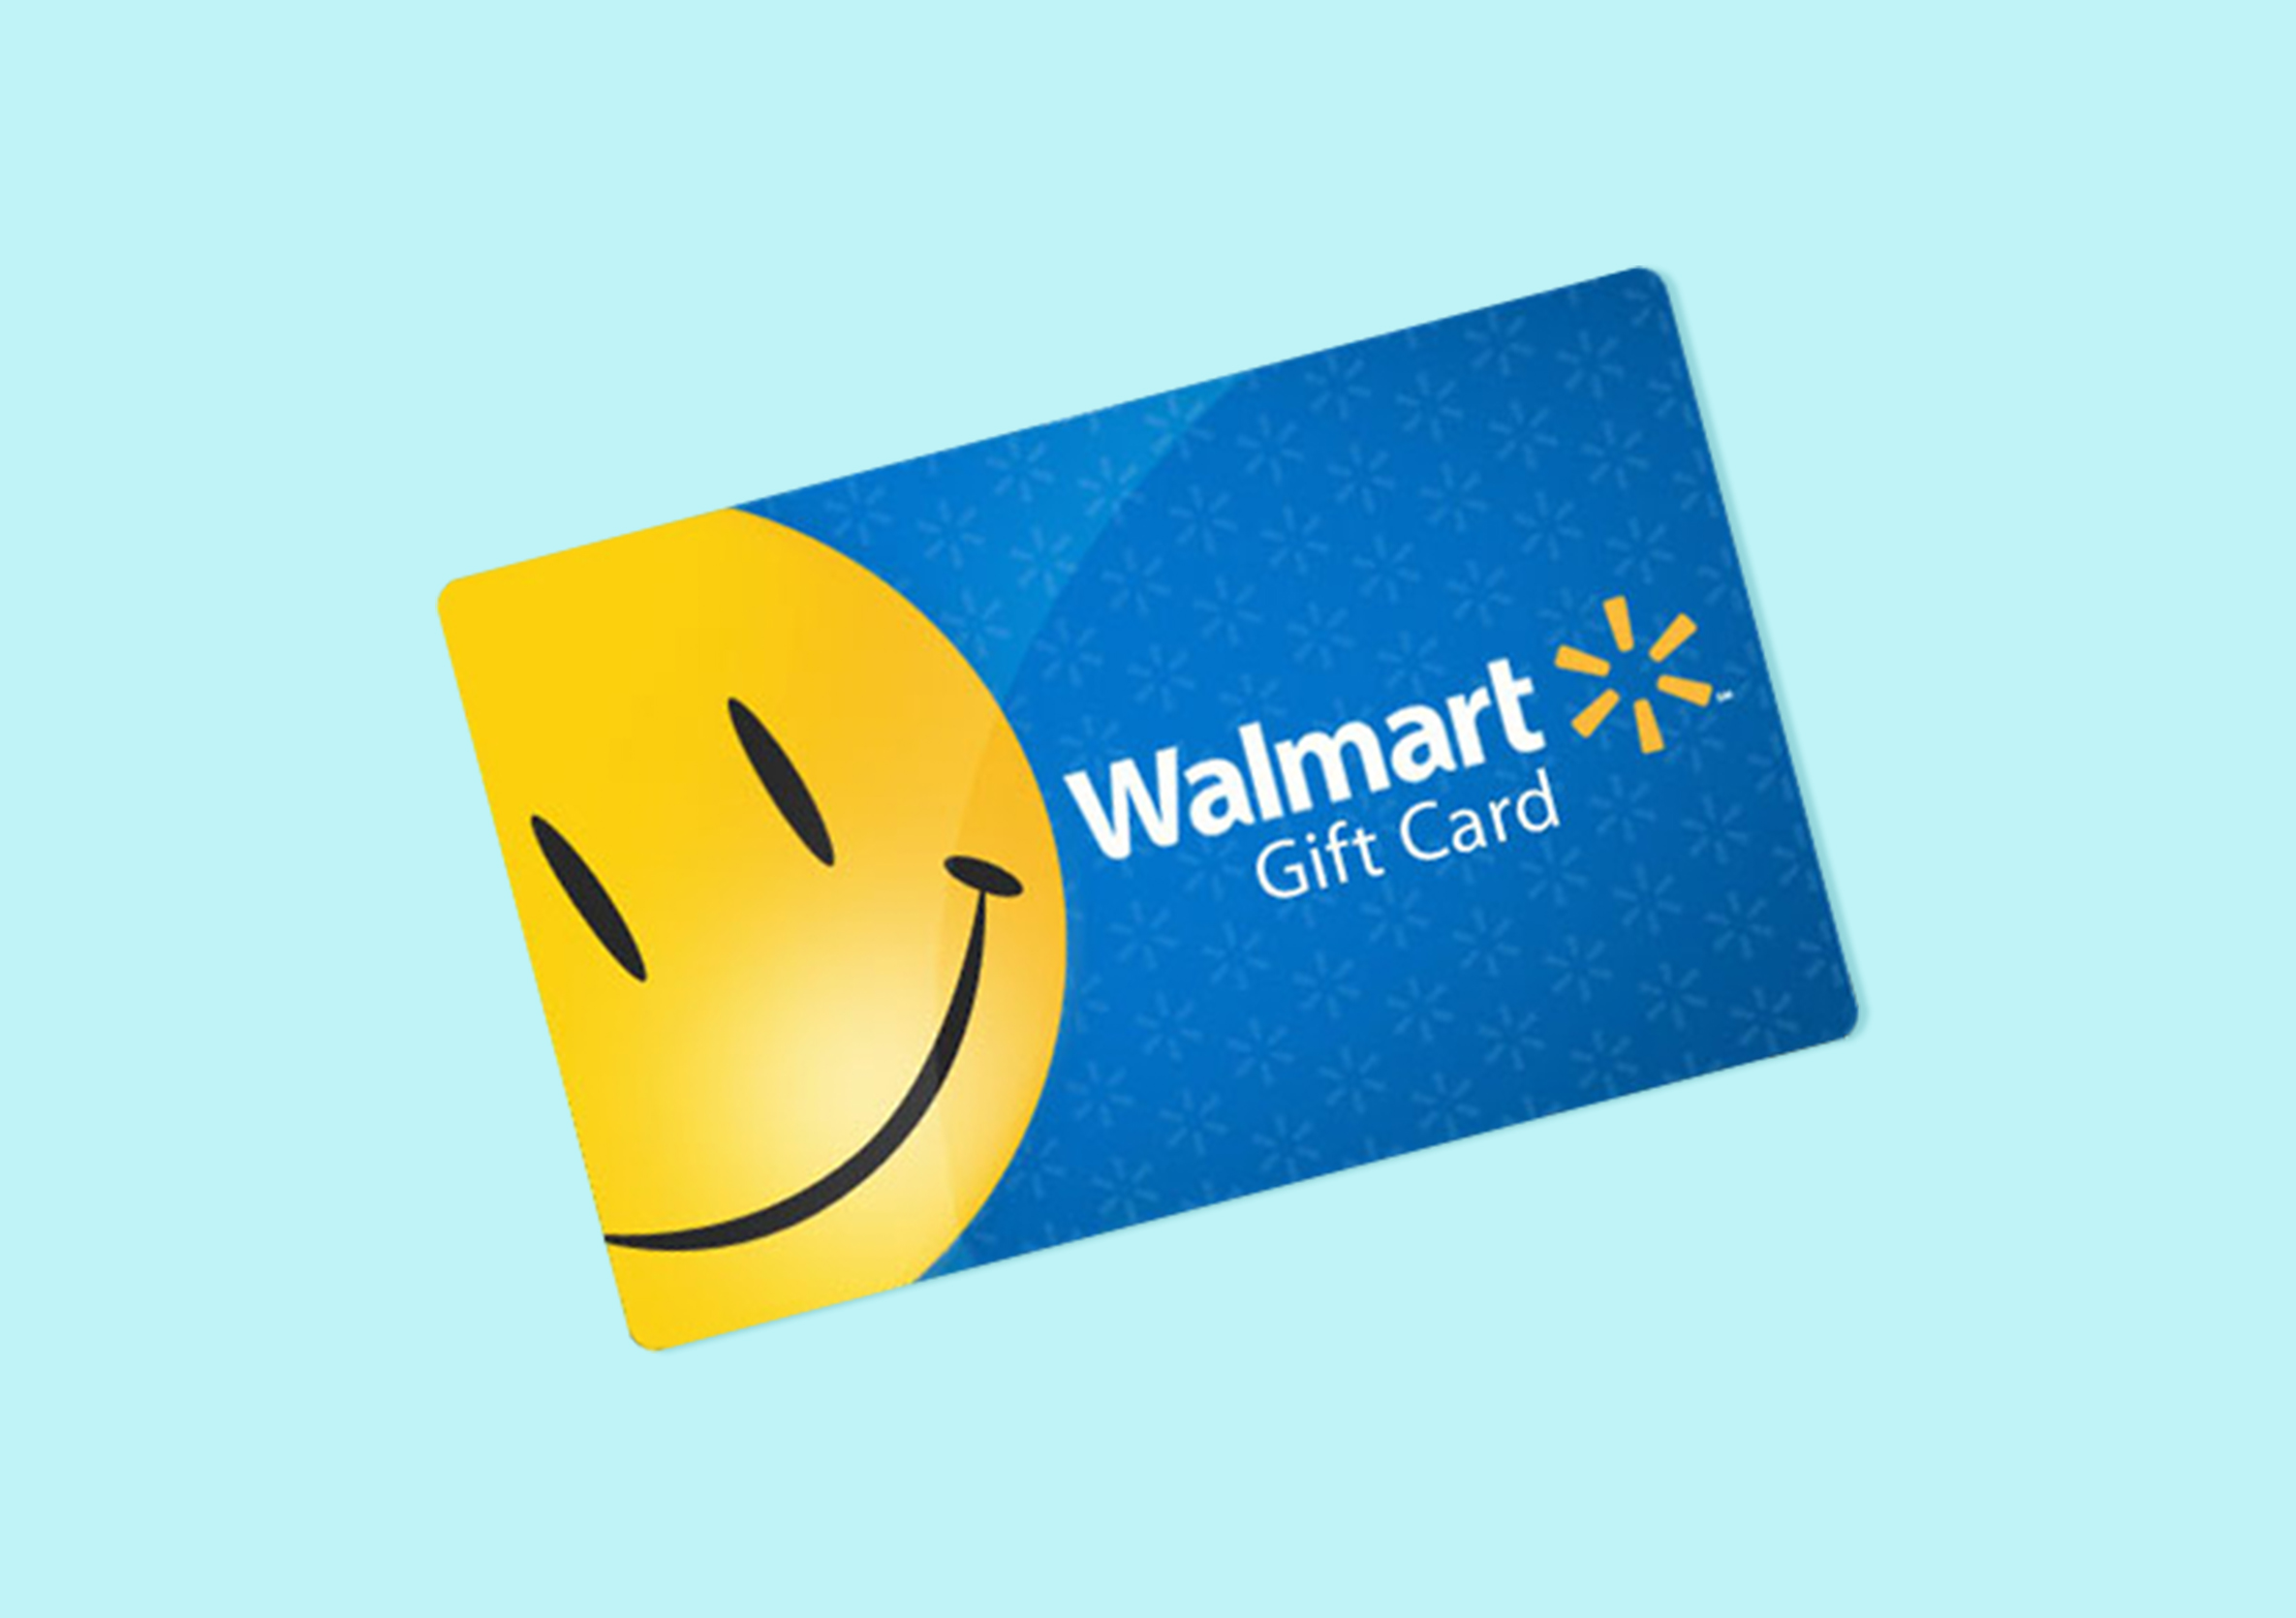 Walmart card